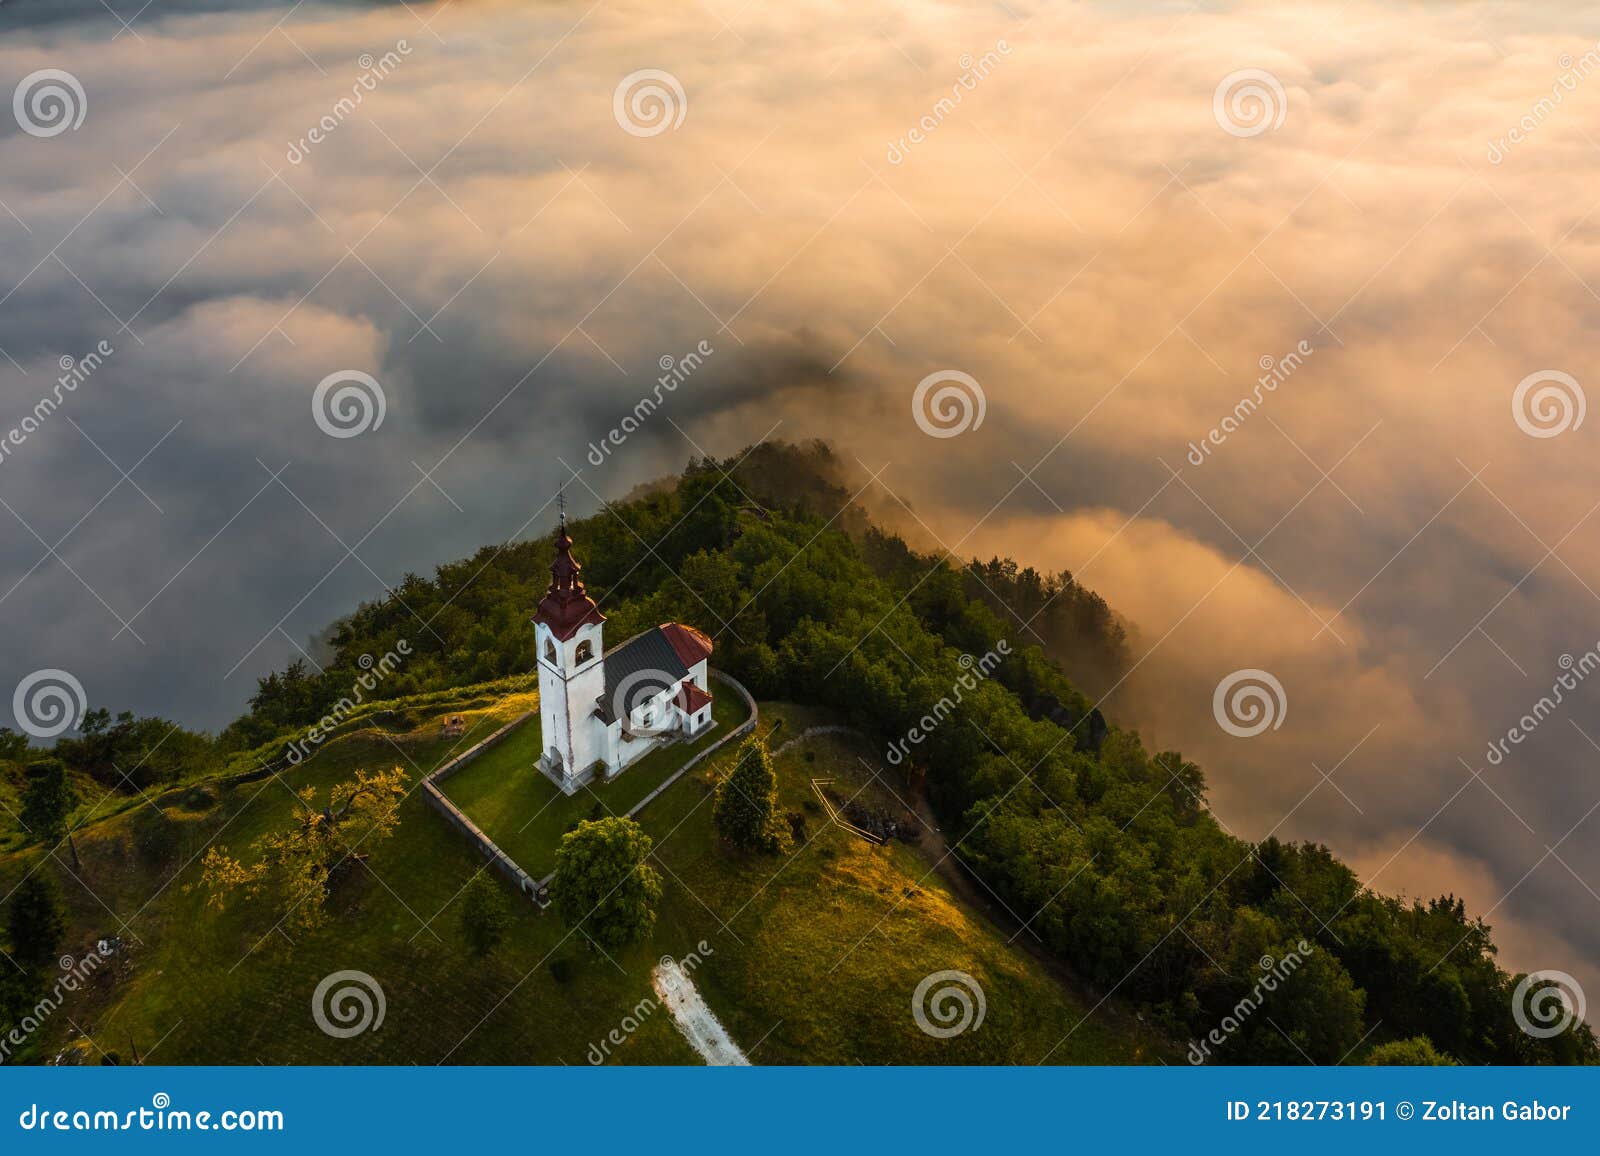 sebrelje, slovenia - aerial drone view of the beautiful hilltop church of st.ivan sv. ivan cerkev at sunrise